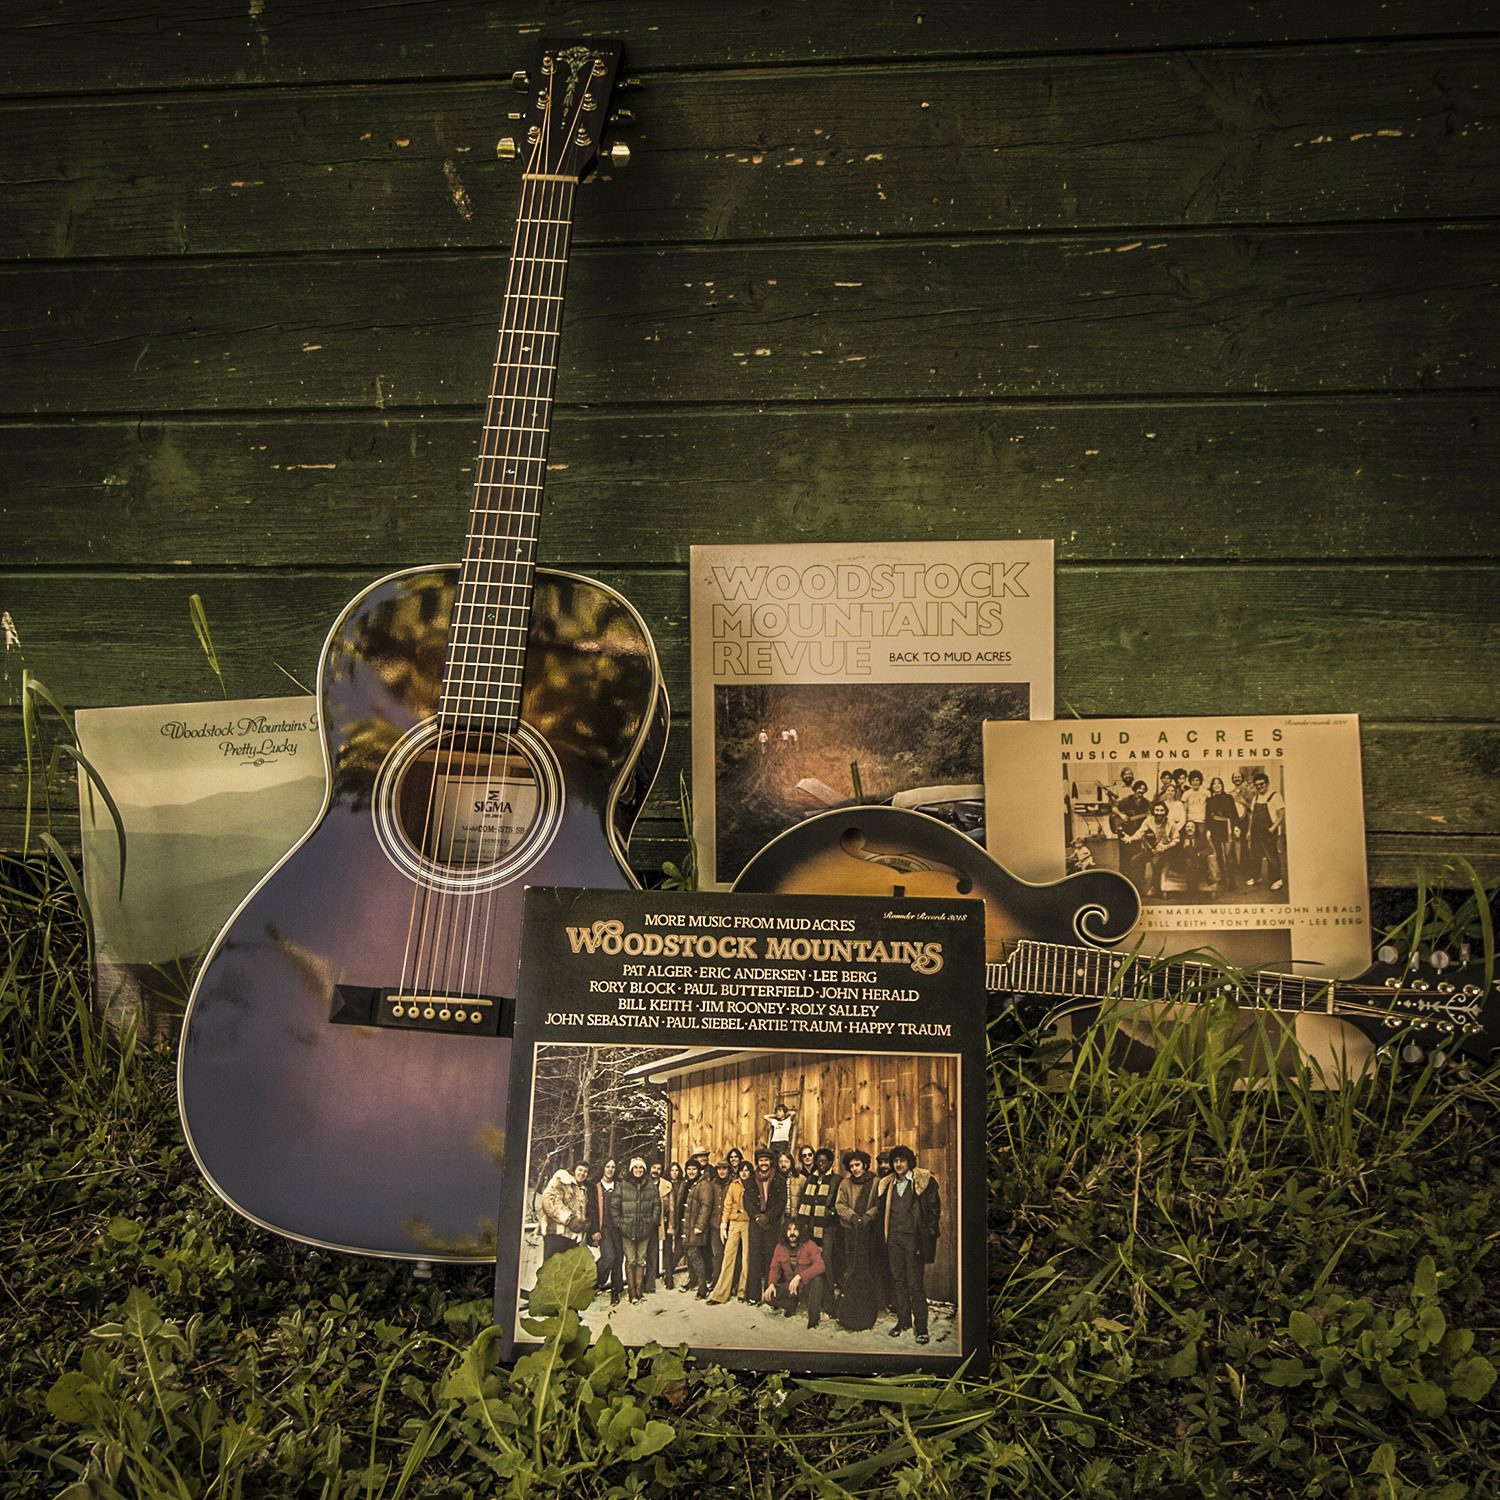 Woodstock Mountains – More Music From Mud Acres foto Antonio Boschi